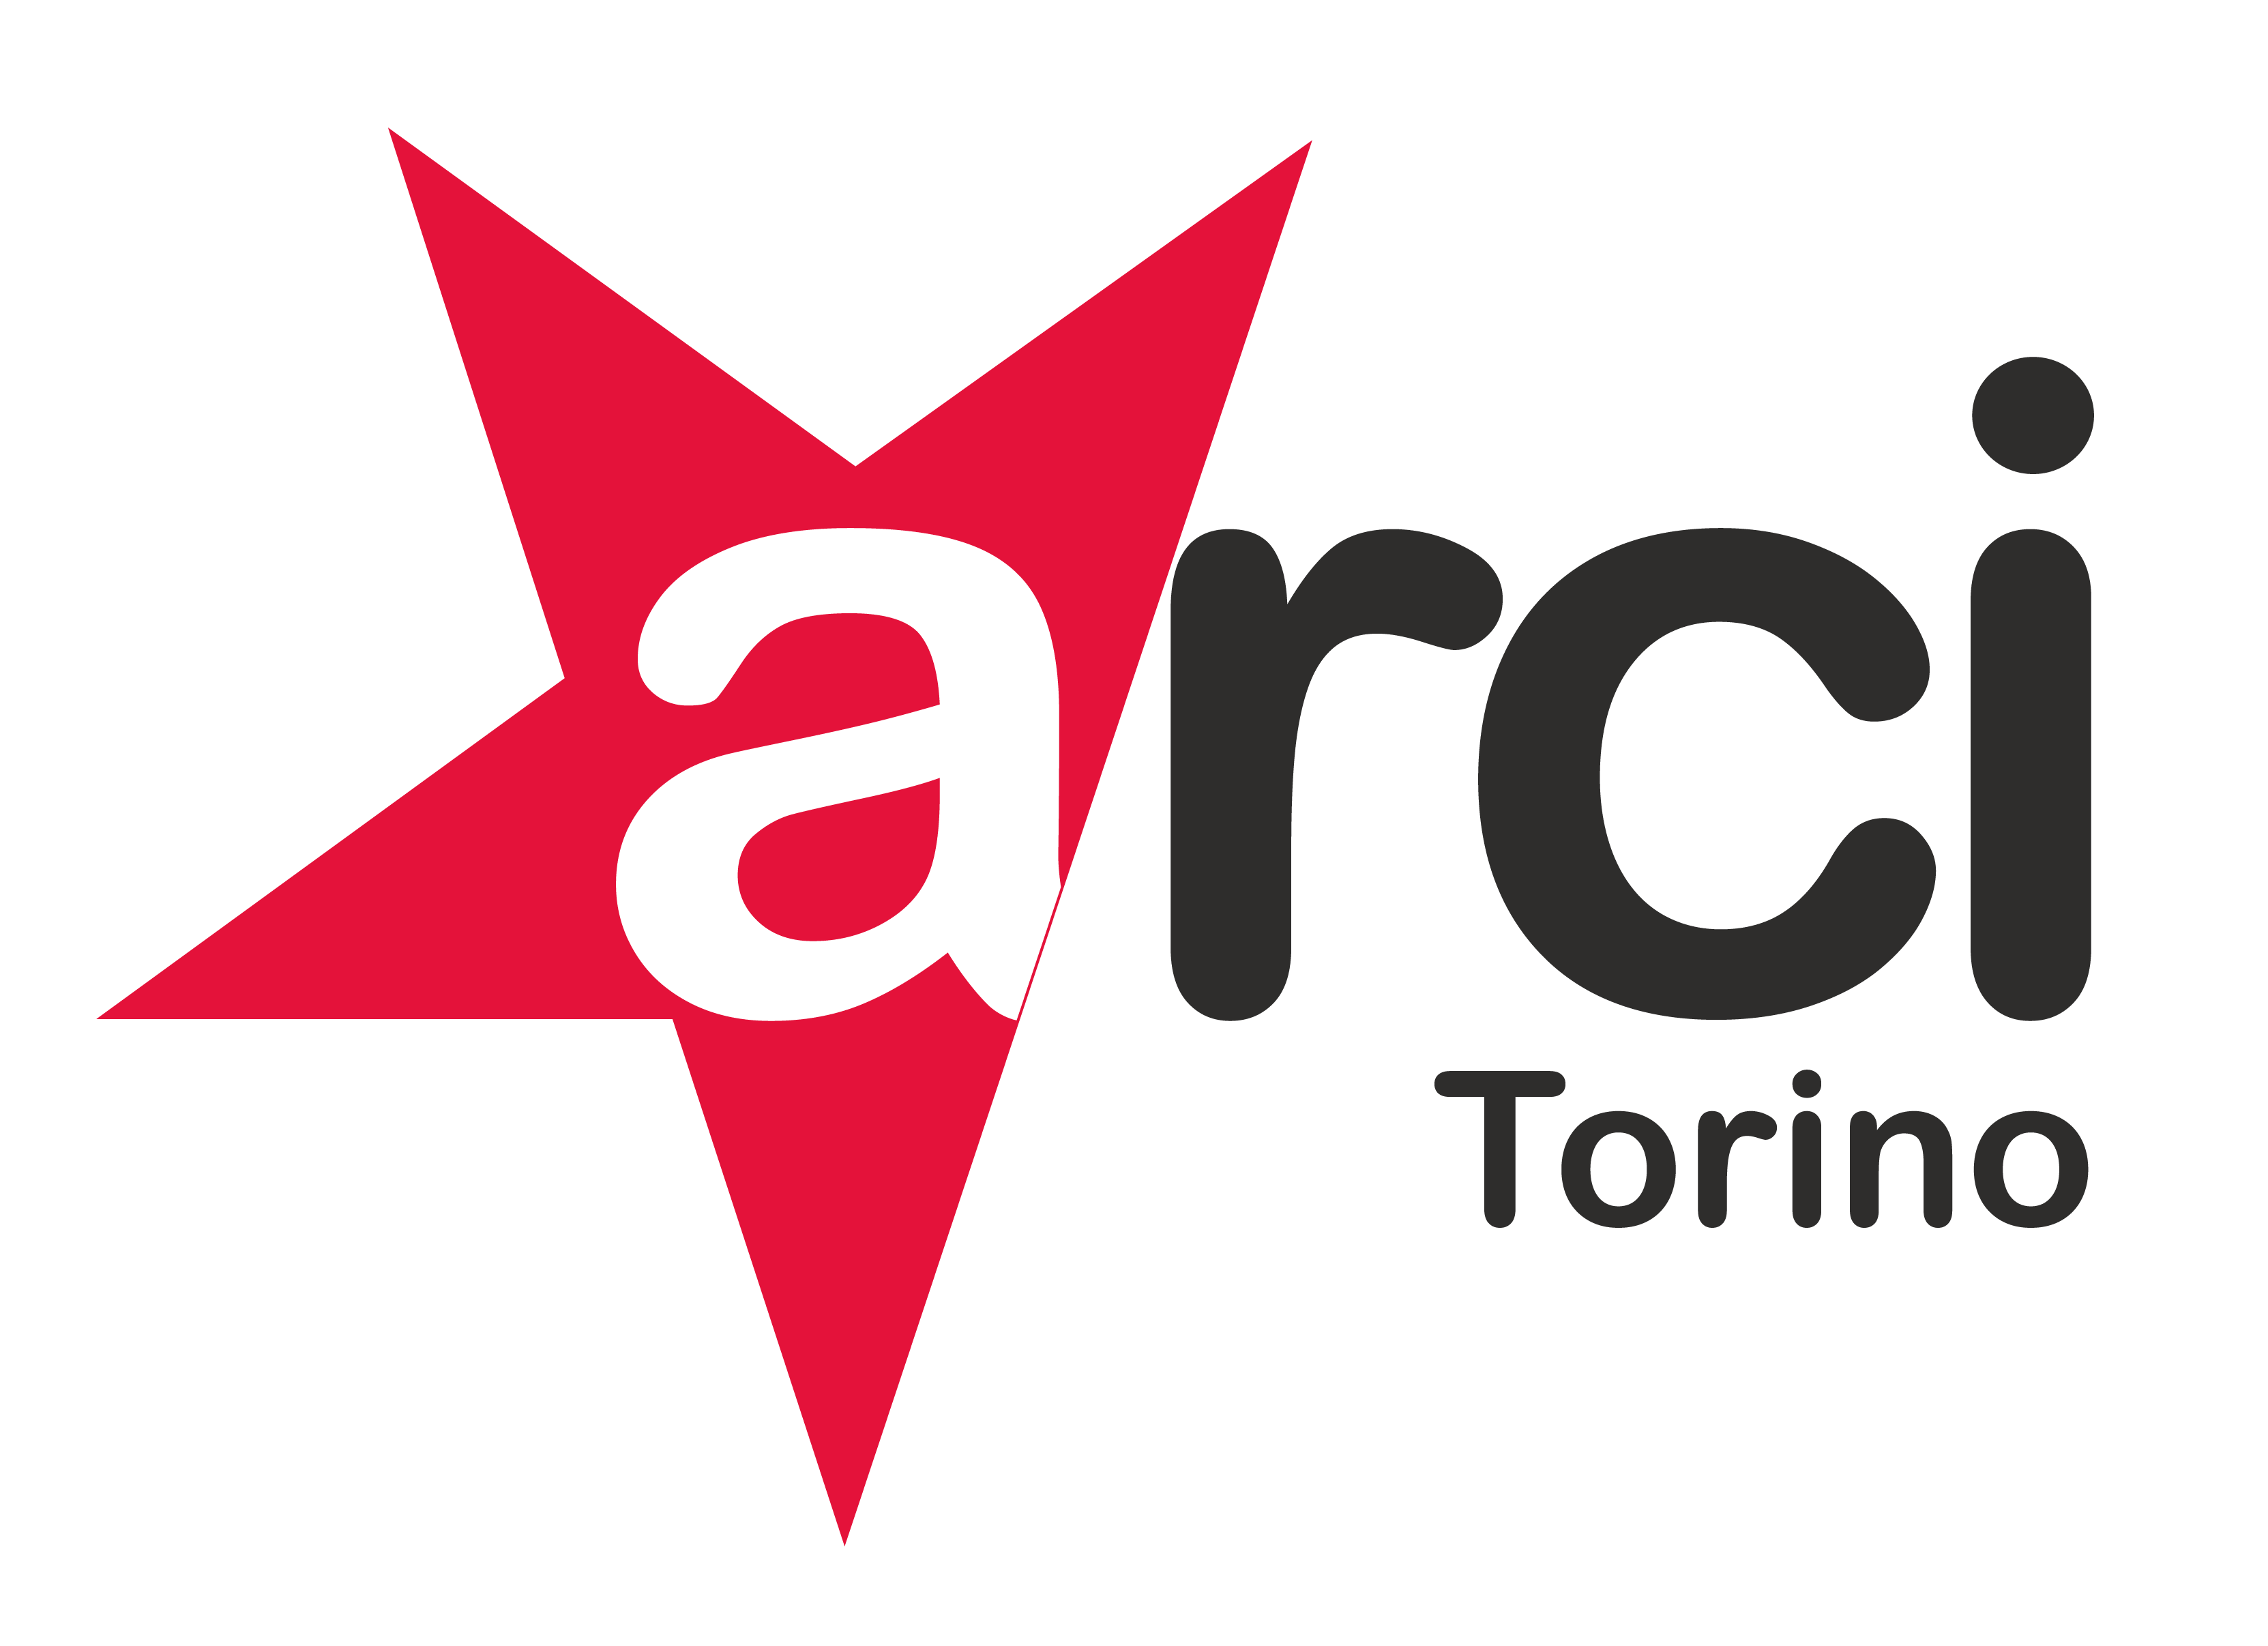 Circolo Arci Torino